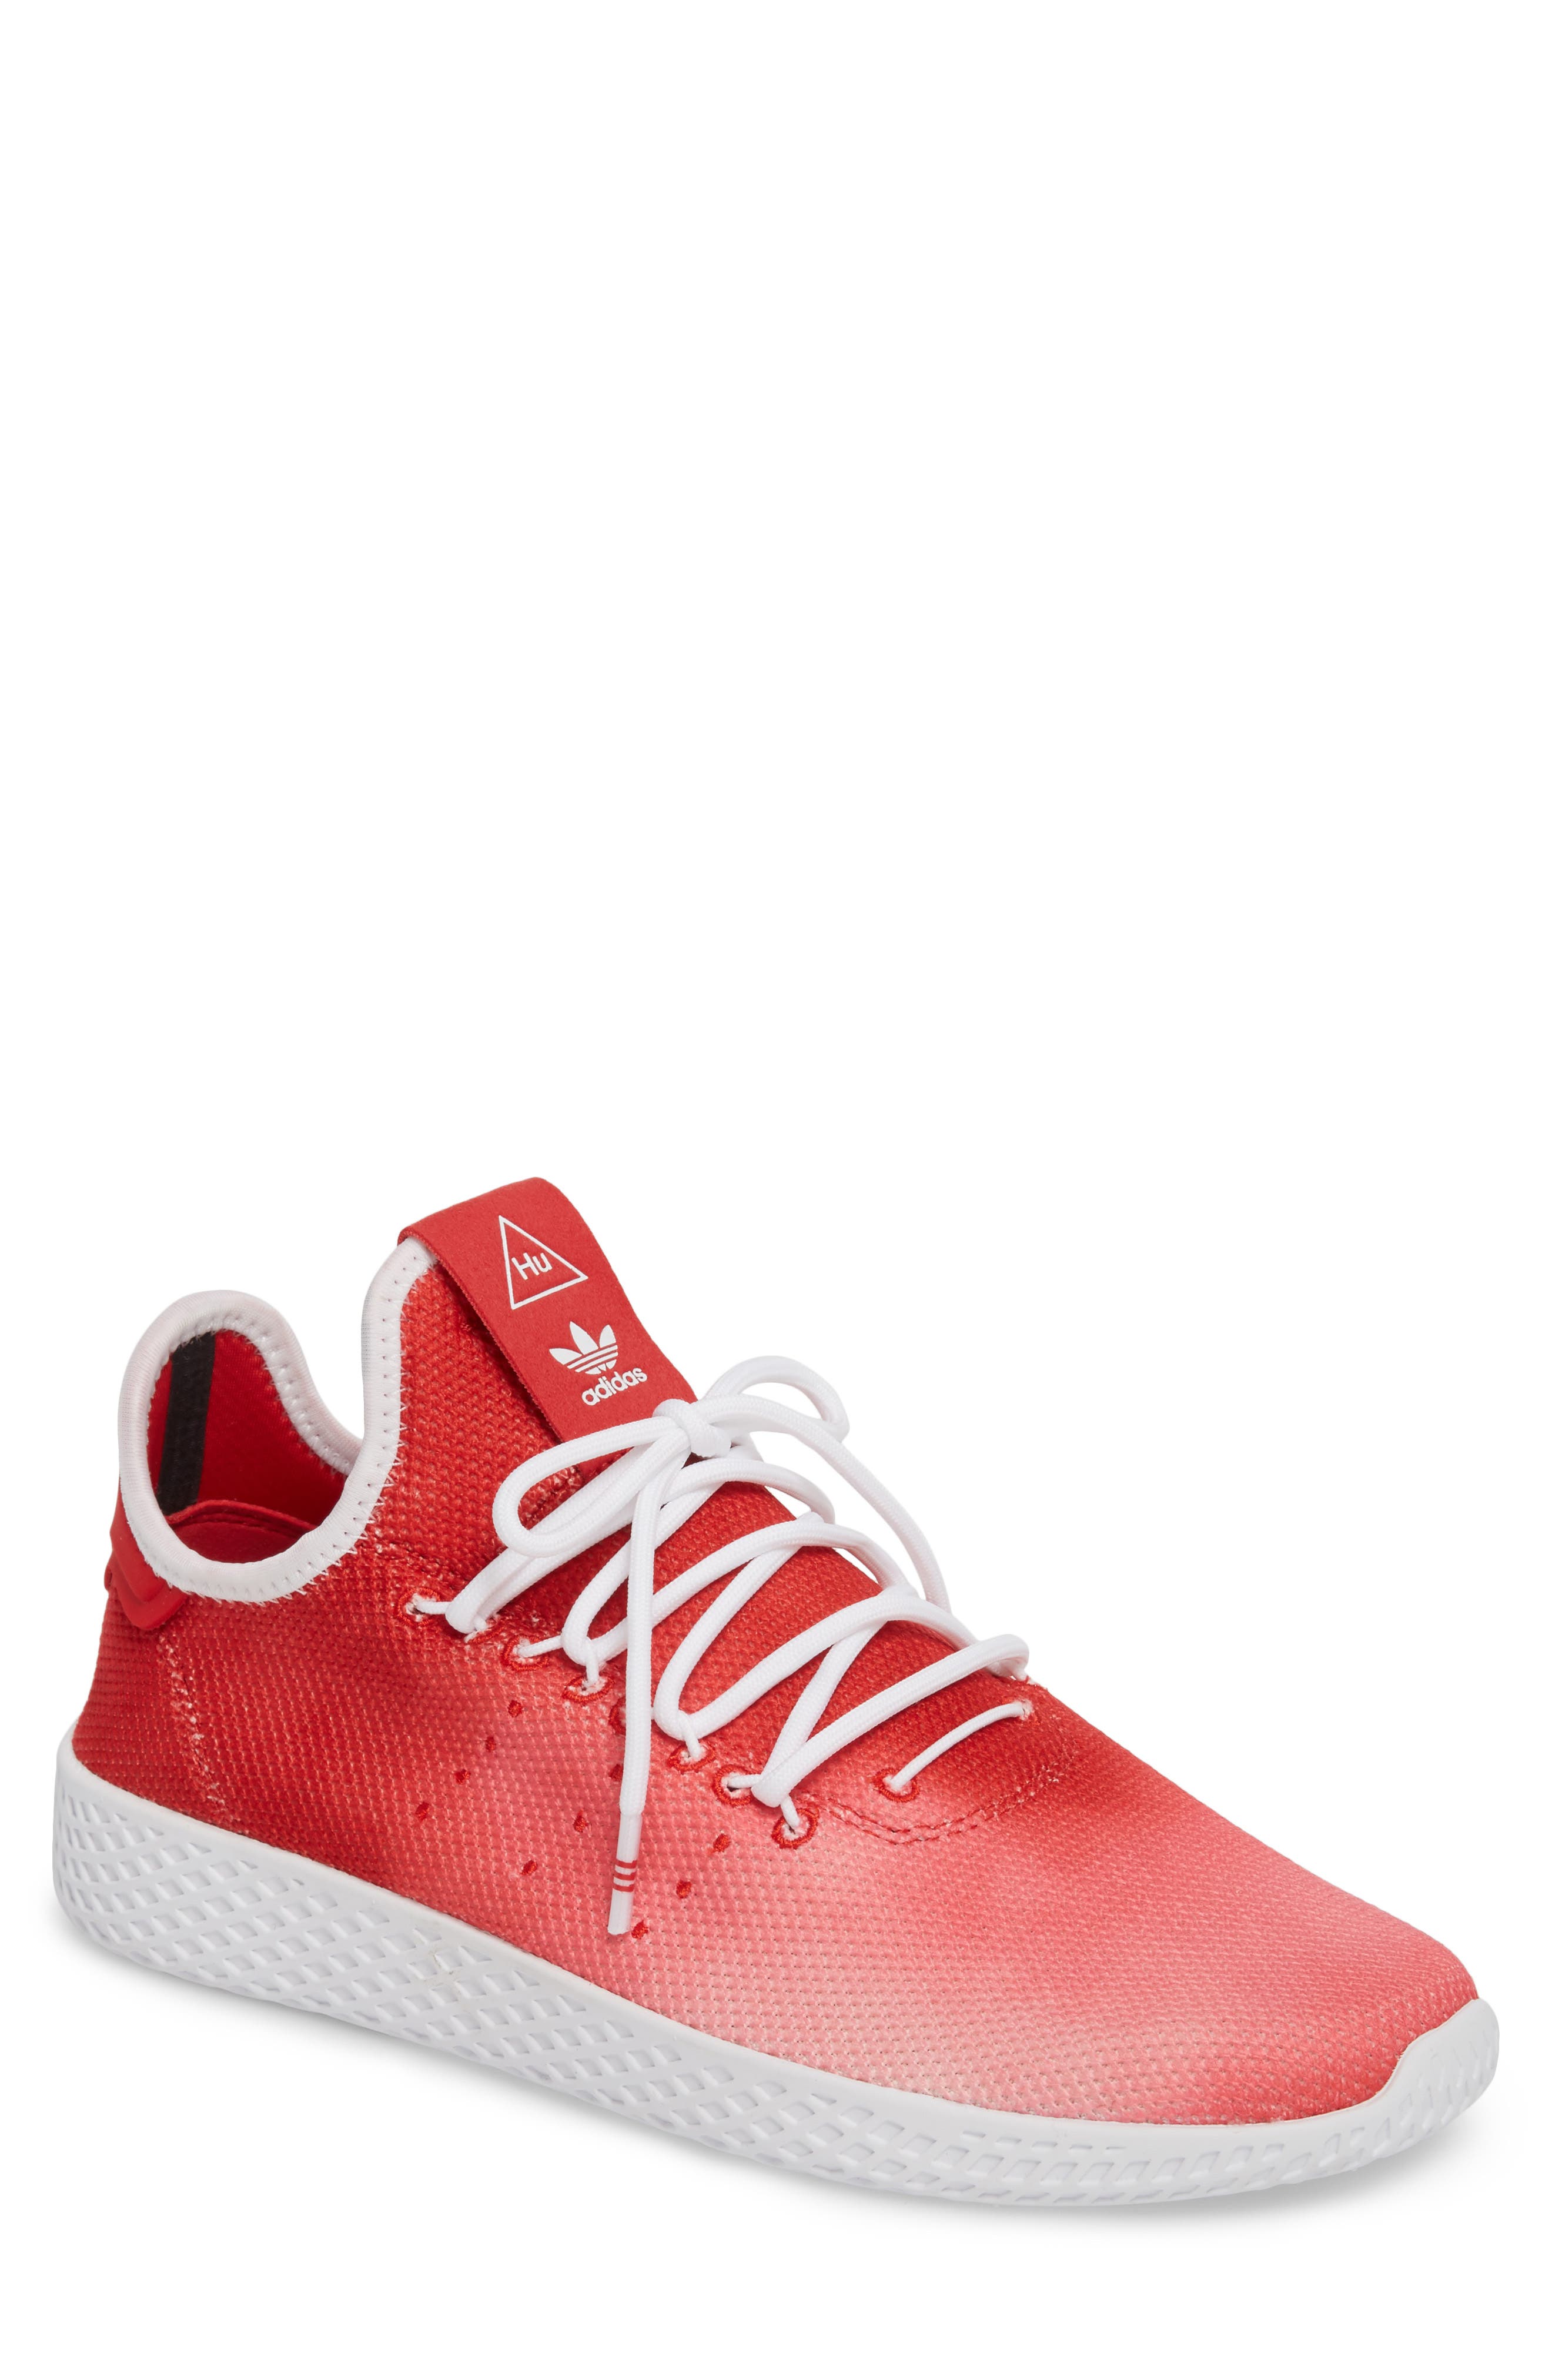 adidas Pharrell Williams Tennis Hu Sneaker (Men)